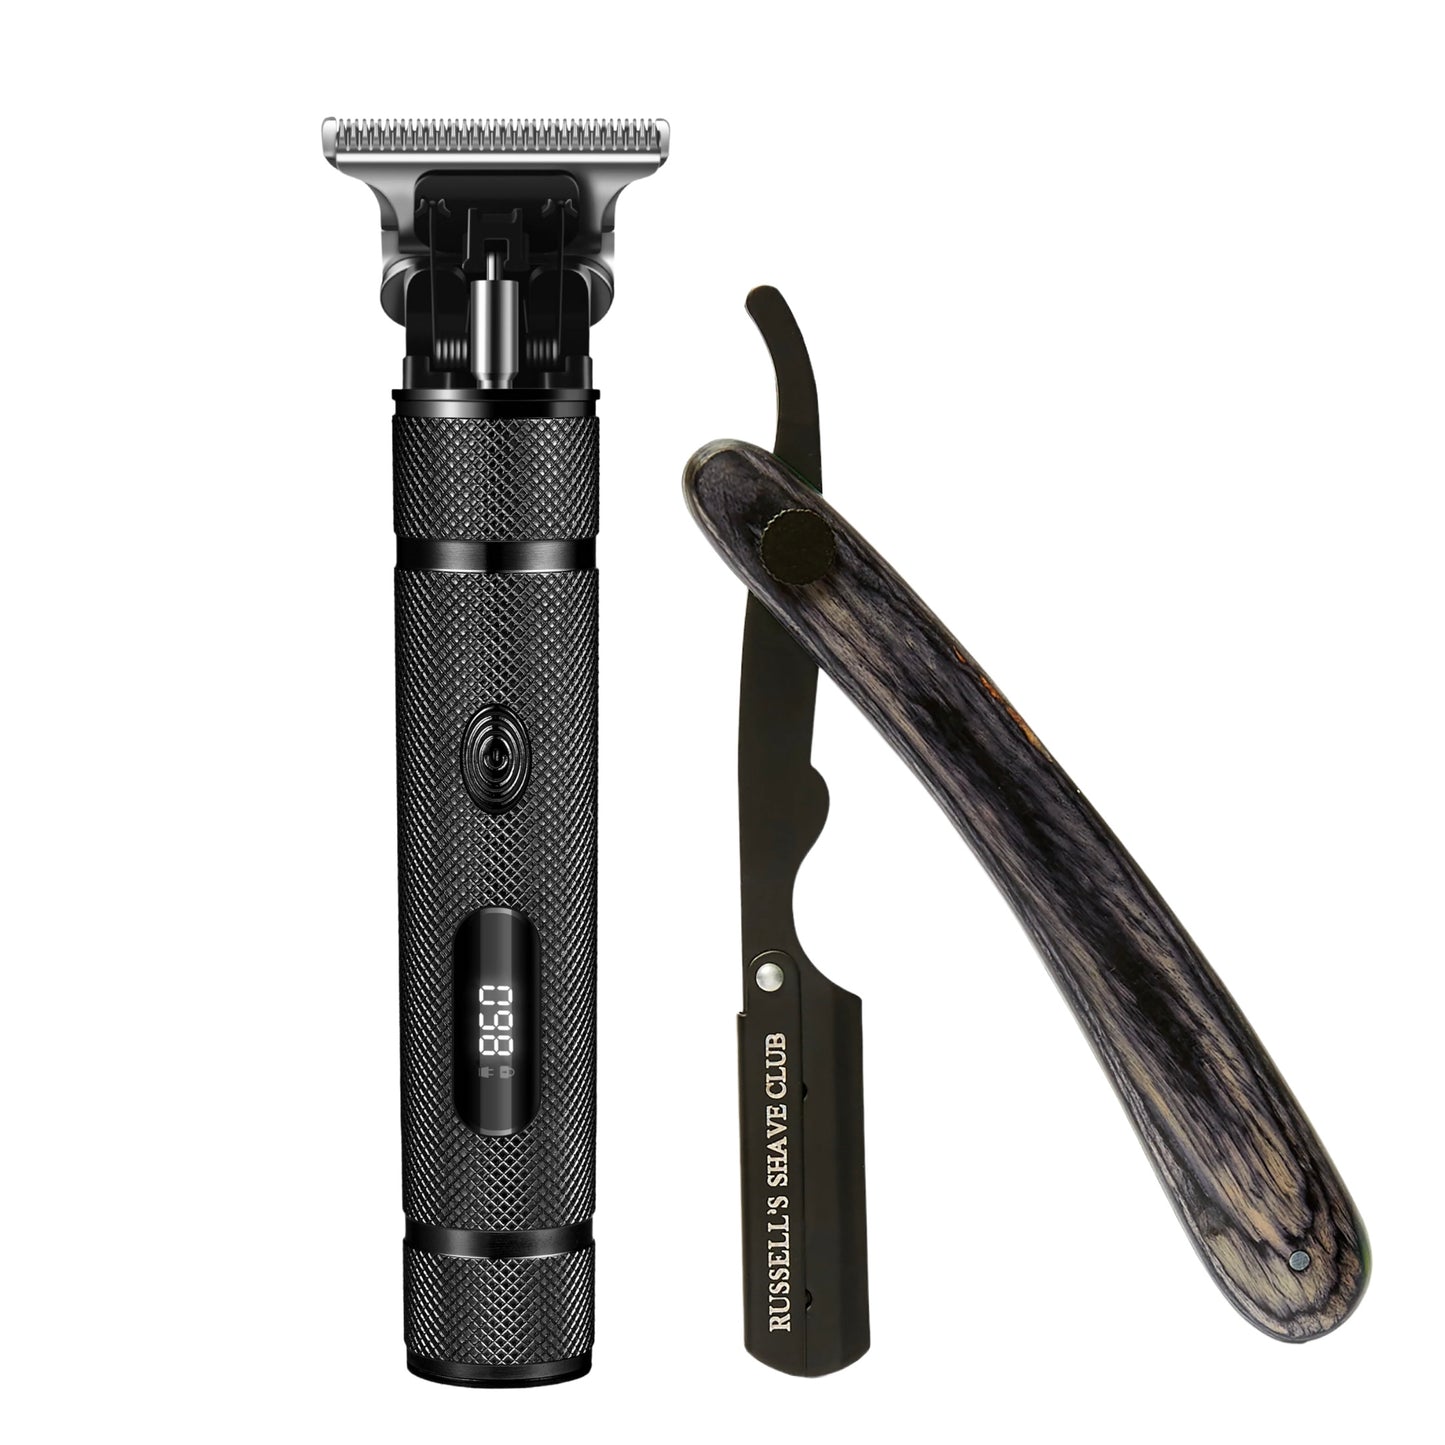 Russell's Precision Pro Beard Shape-Up Kit - Black Trimmer